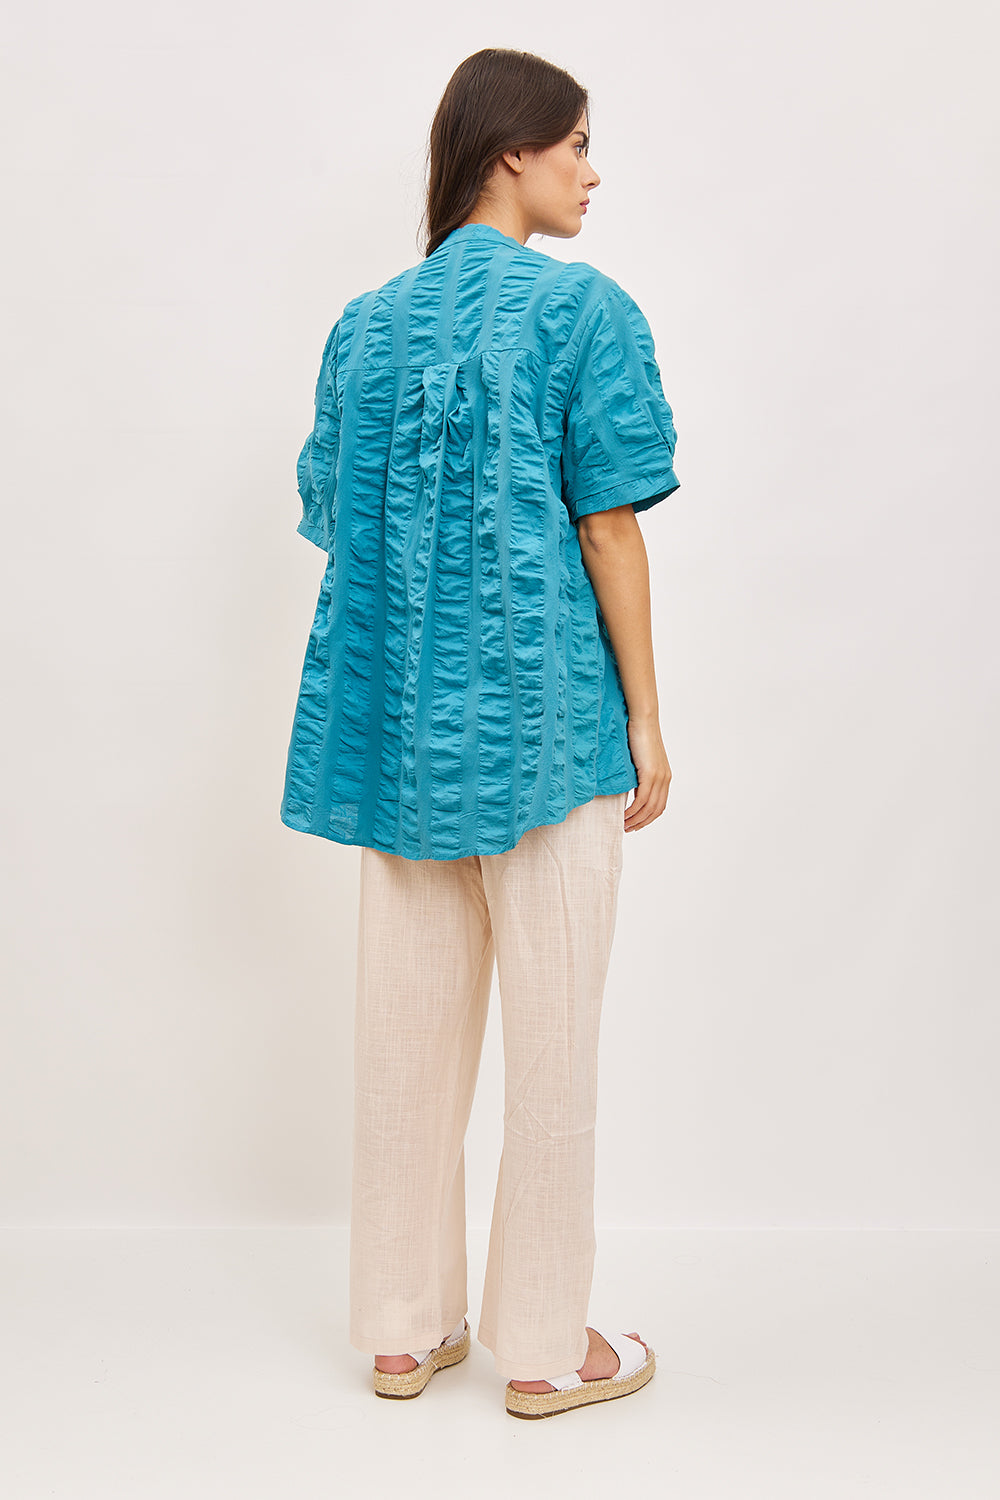 Asymmetrical pleated blouse